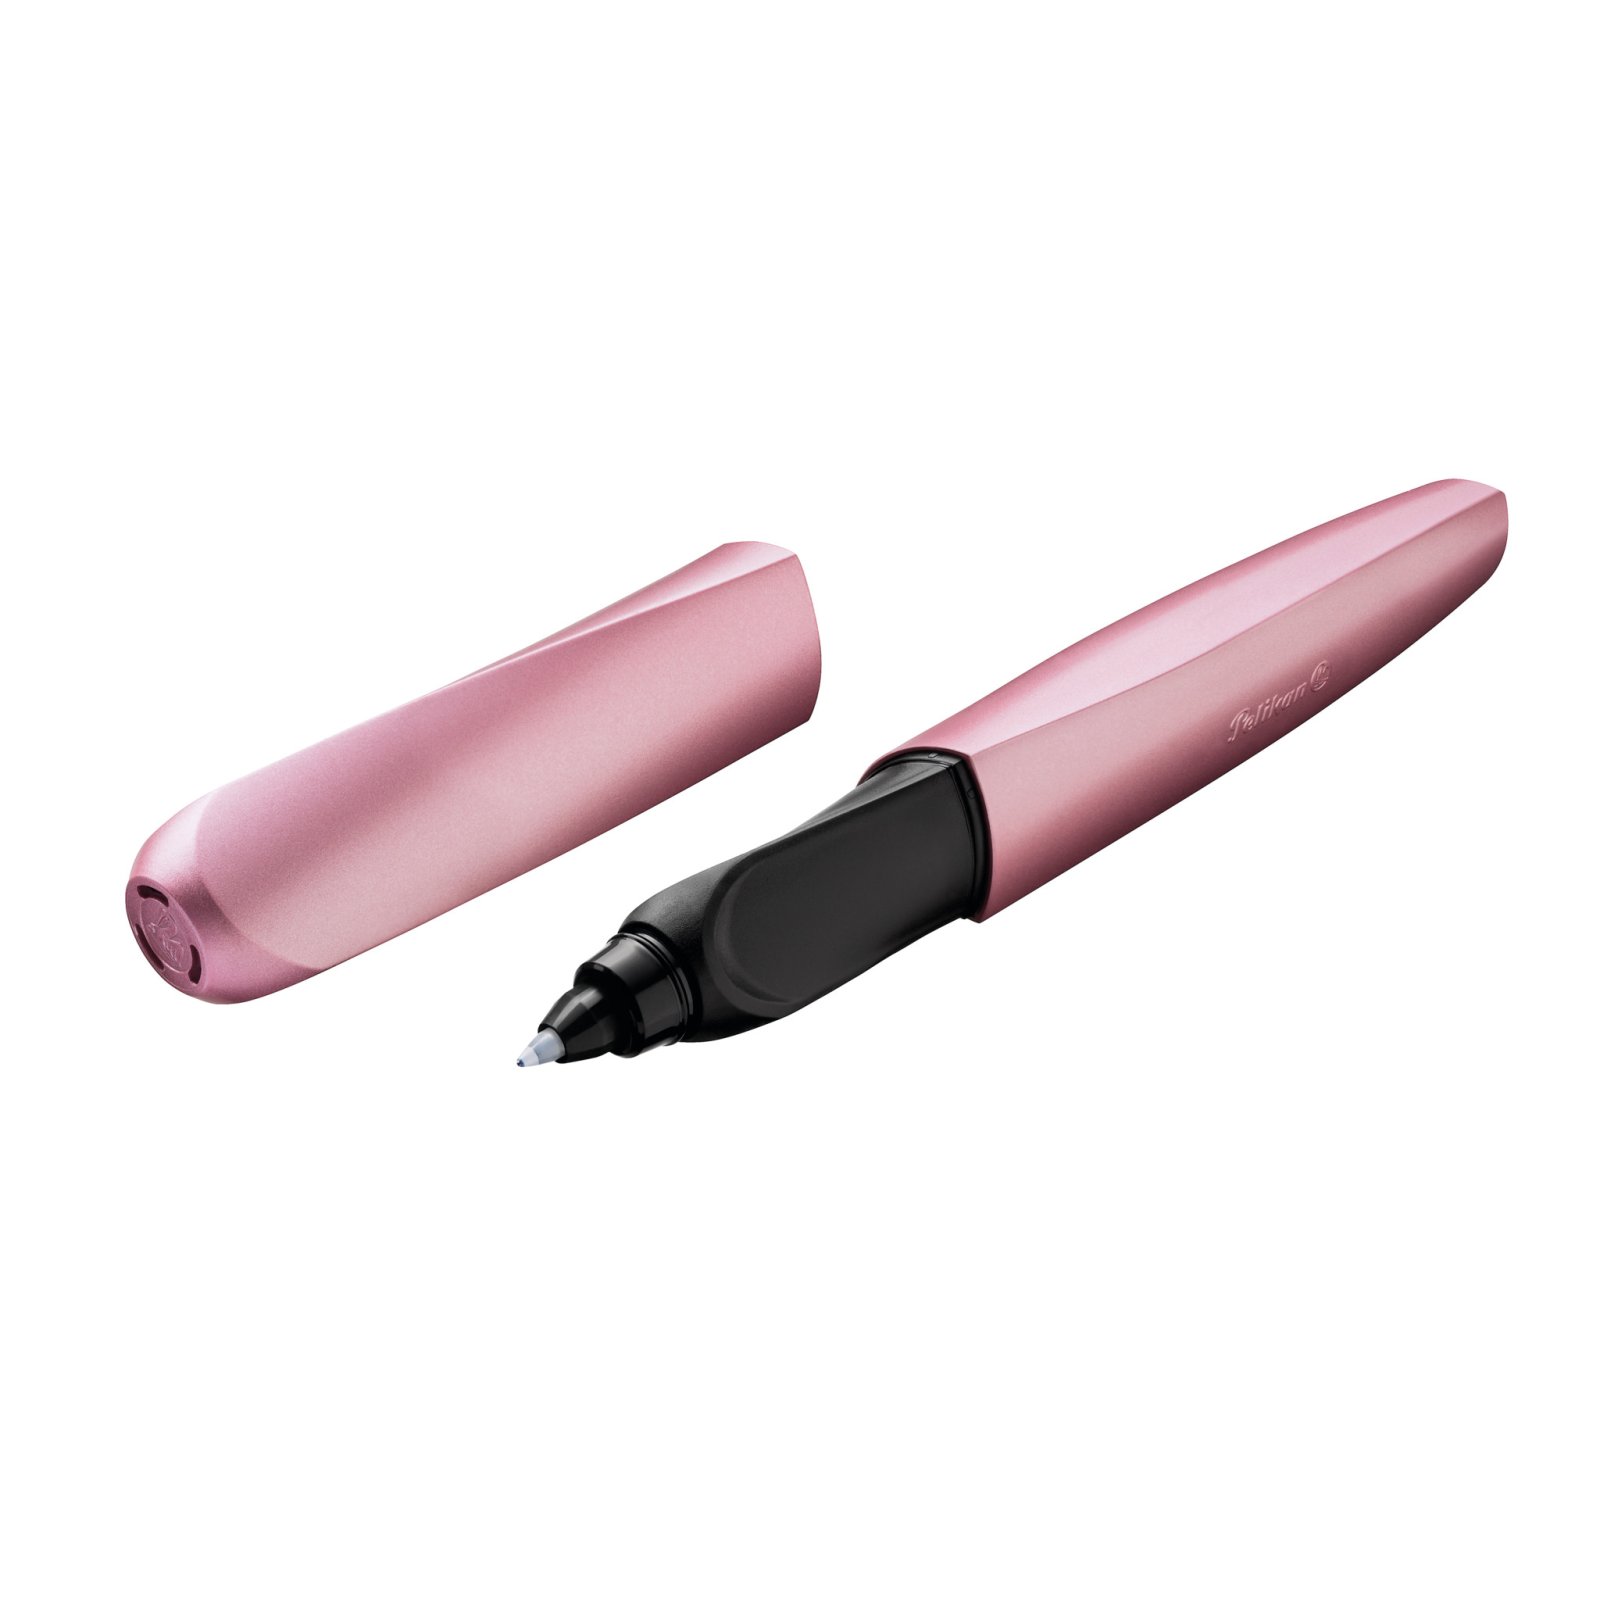 € L+R 10,50 Pelikan 806299 sch, Girly Twist rosa-metallic Tintenroller - Rose,